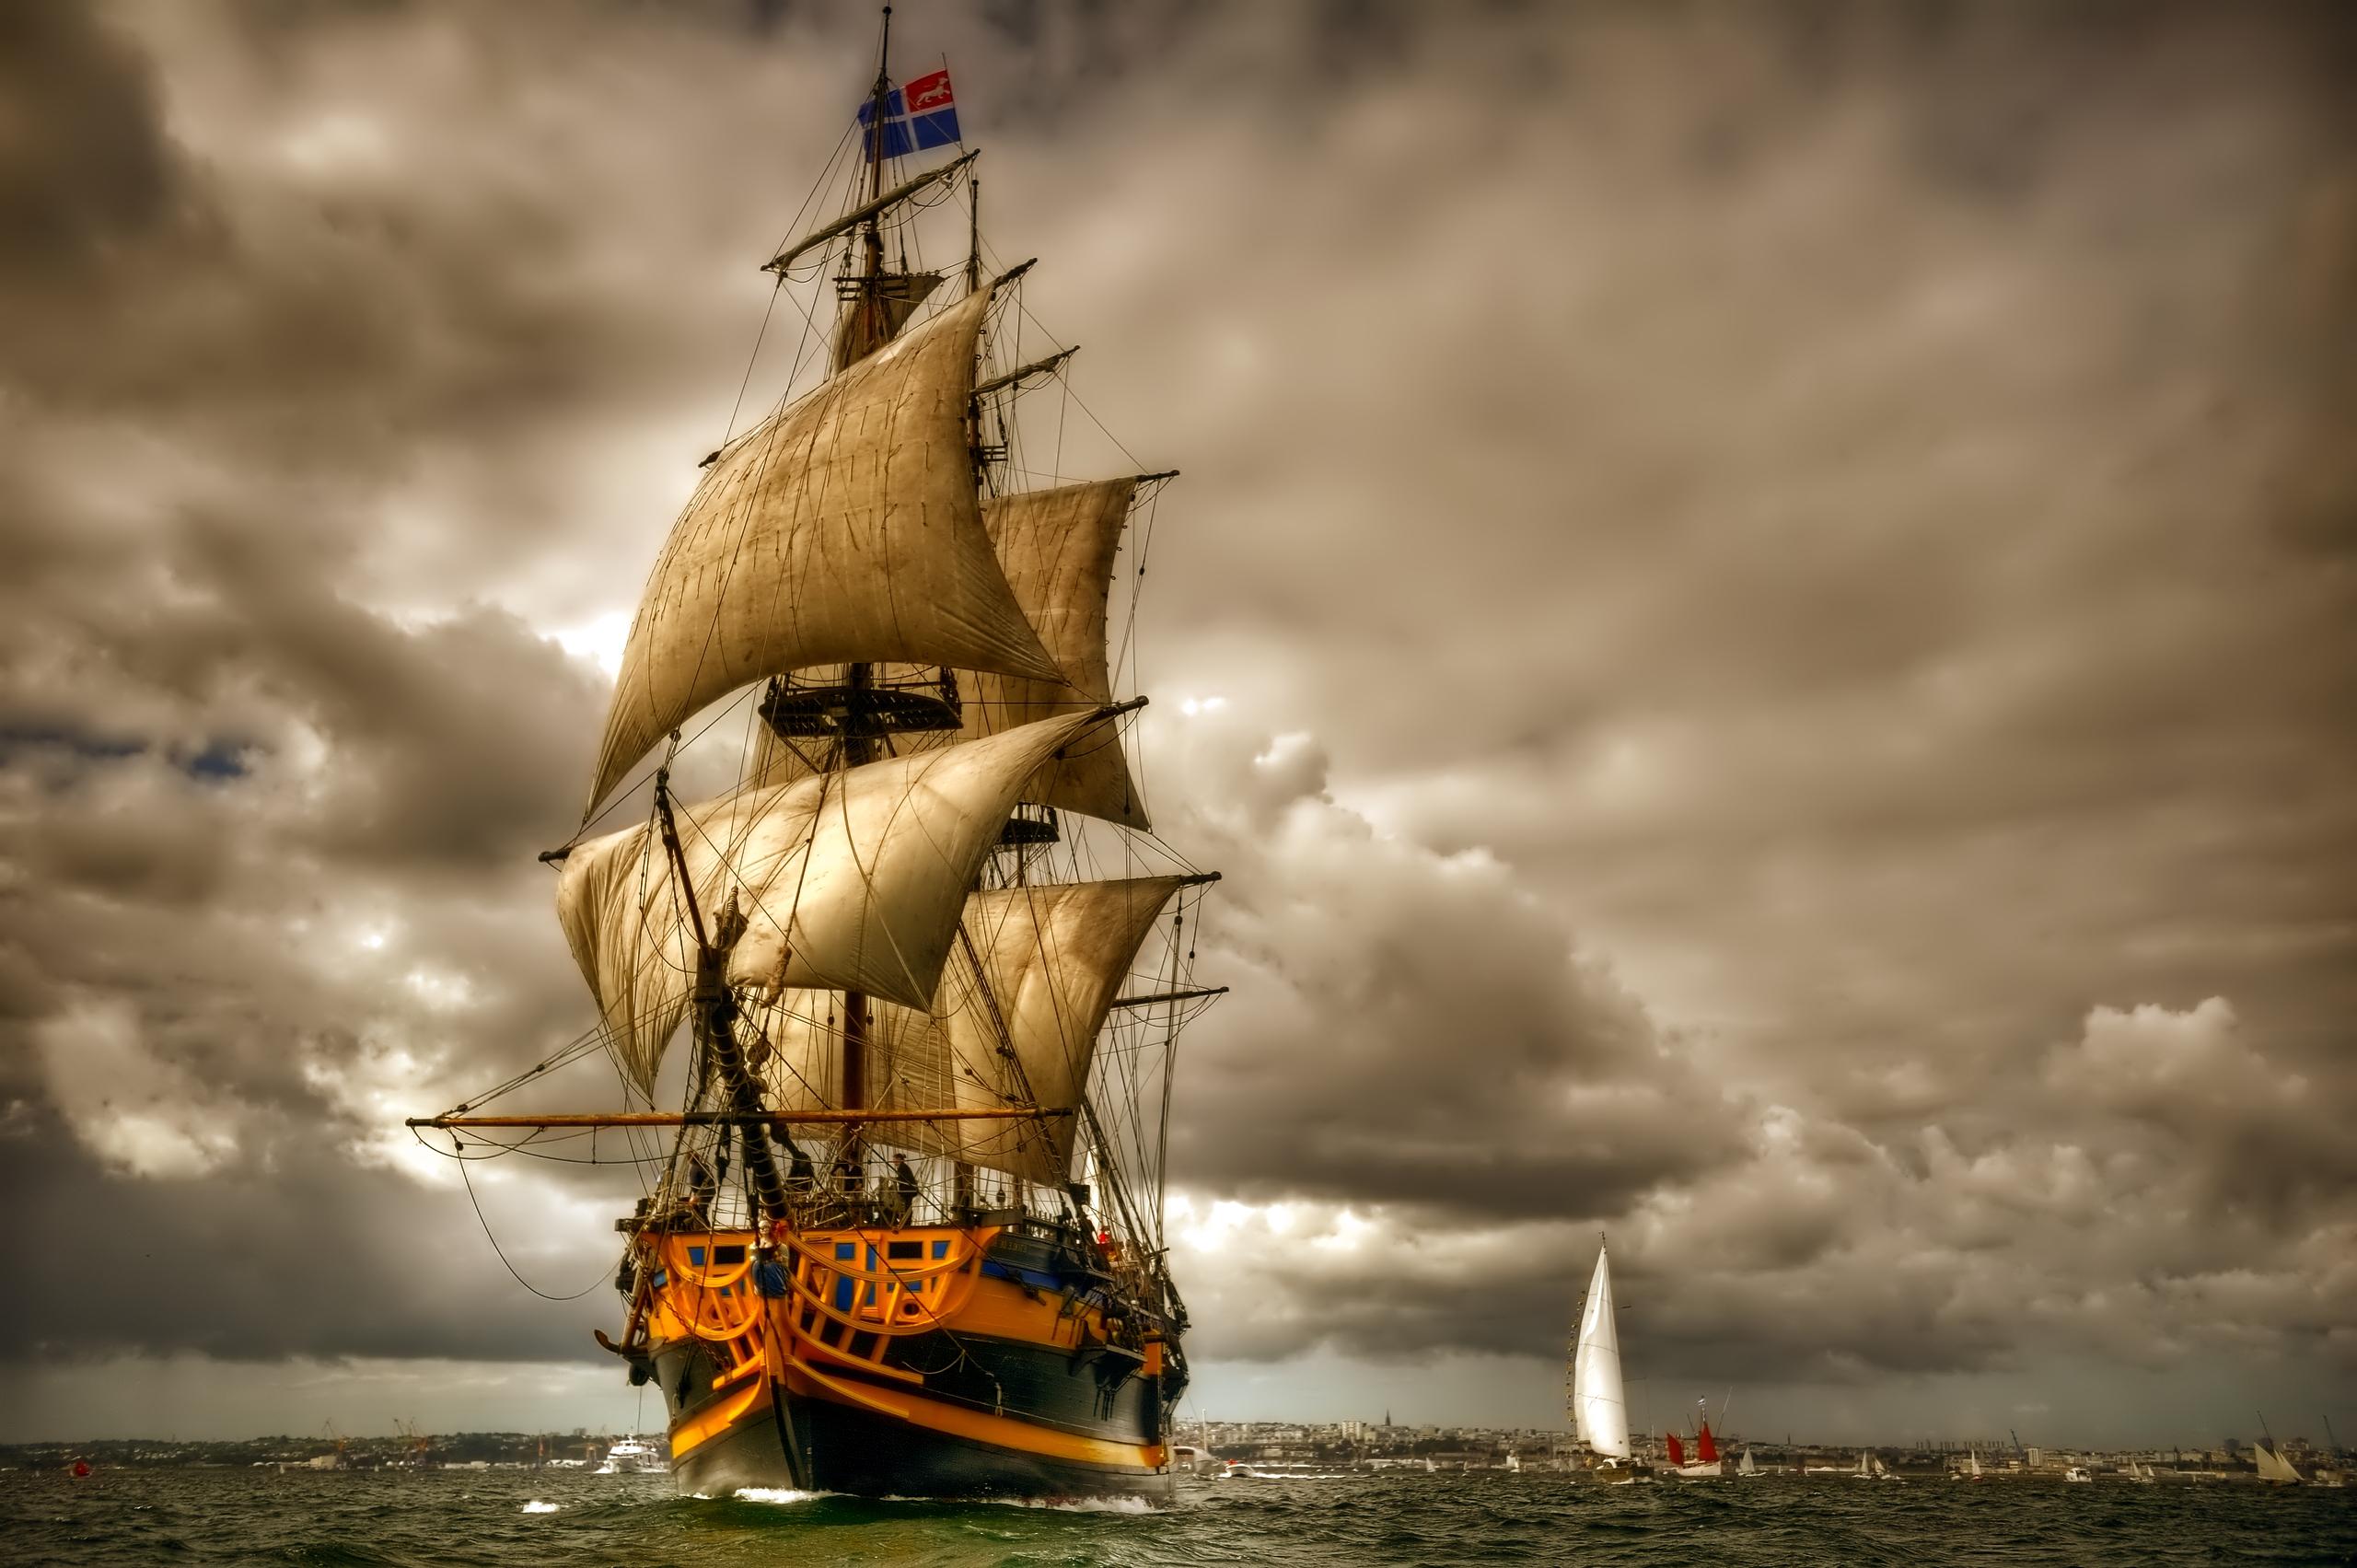 ship wallpaper hd,sailing ship,tall ship,vehicle,flagship,fluyt